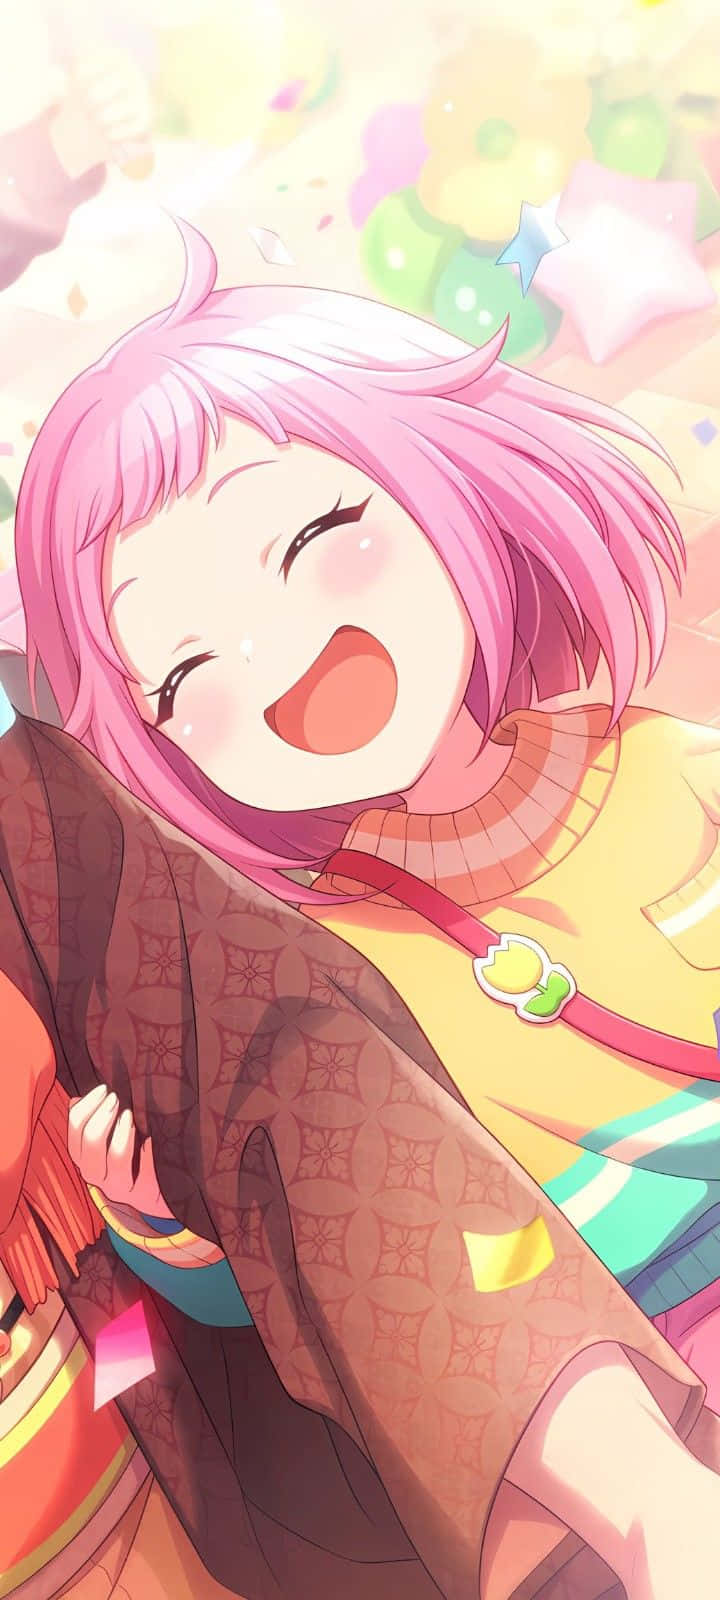 Joyful_ Anime_ Character_ Profile Wallpaper